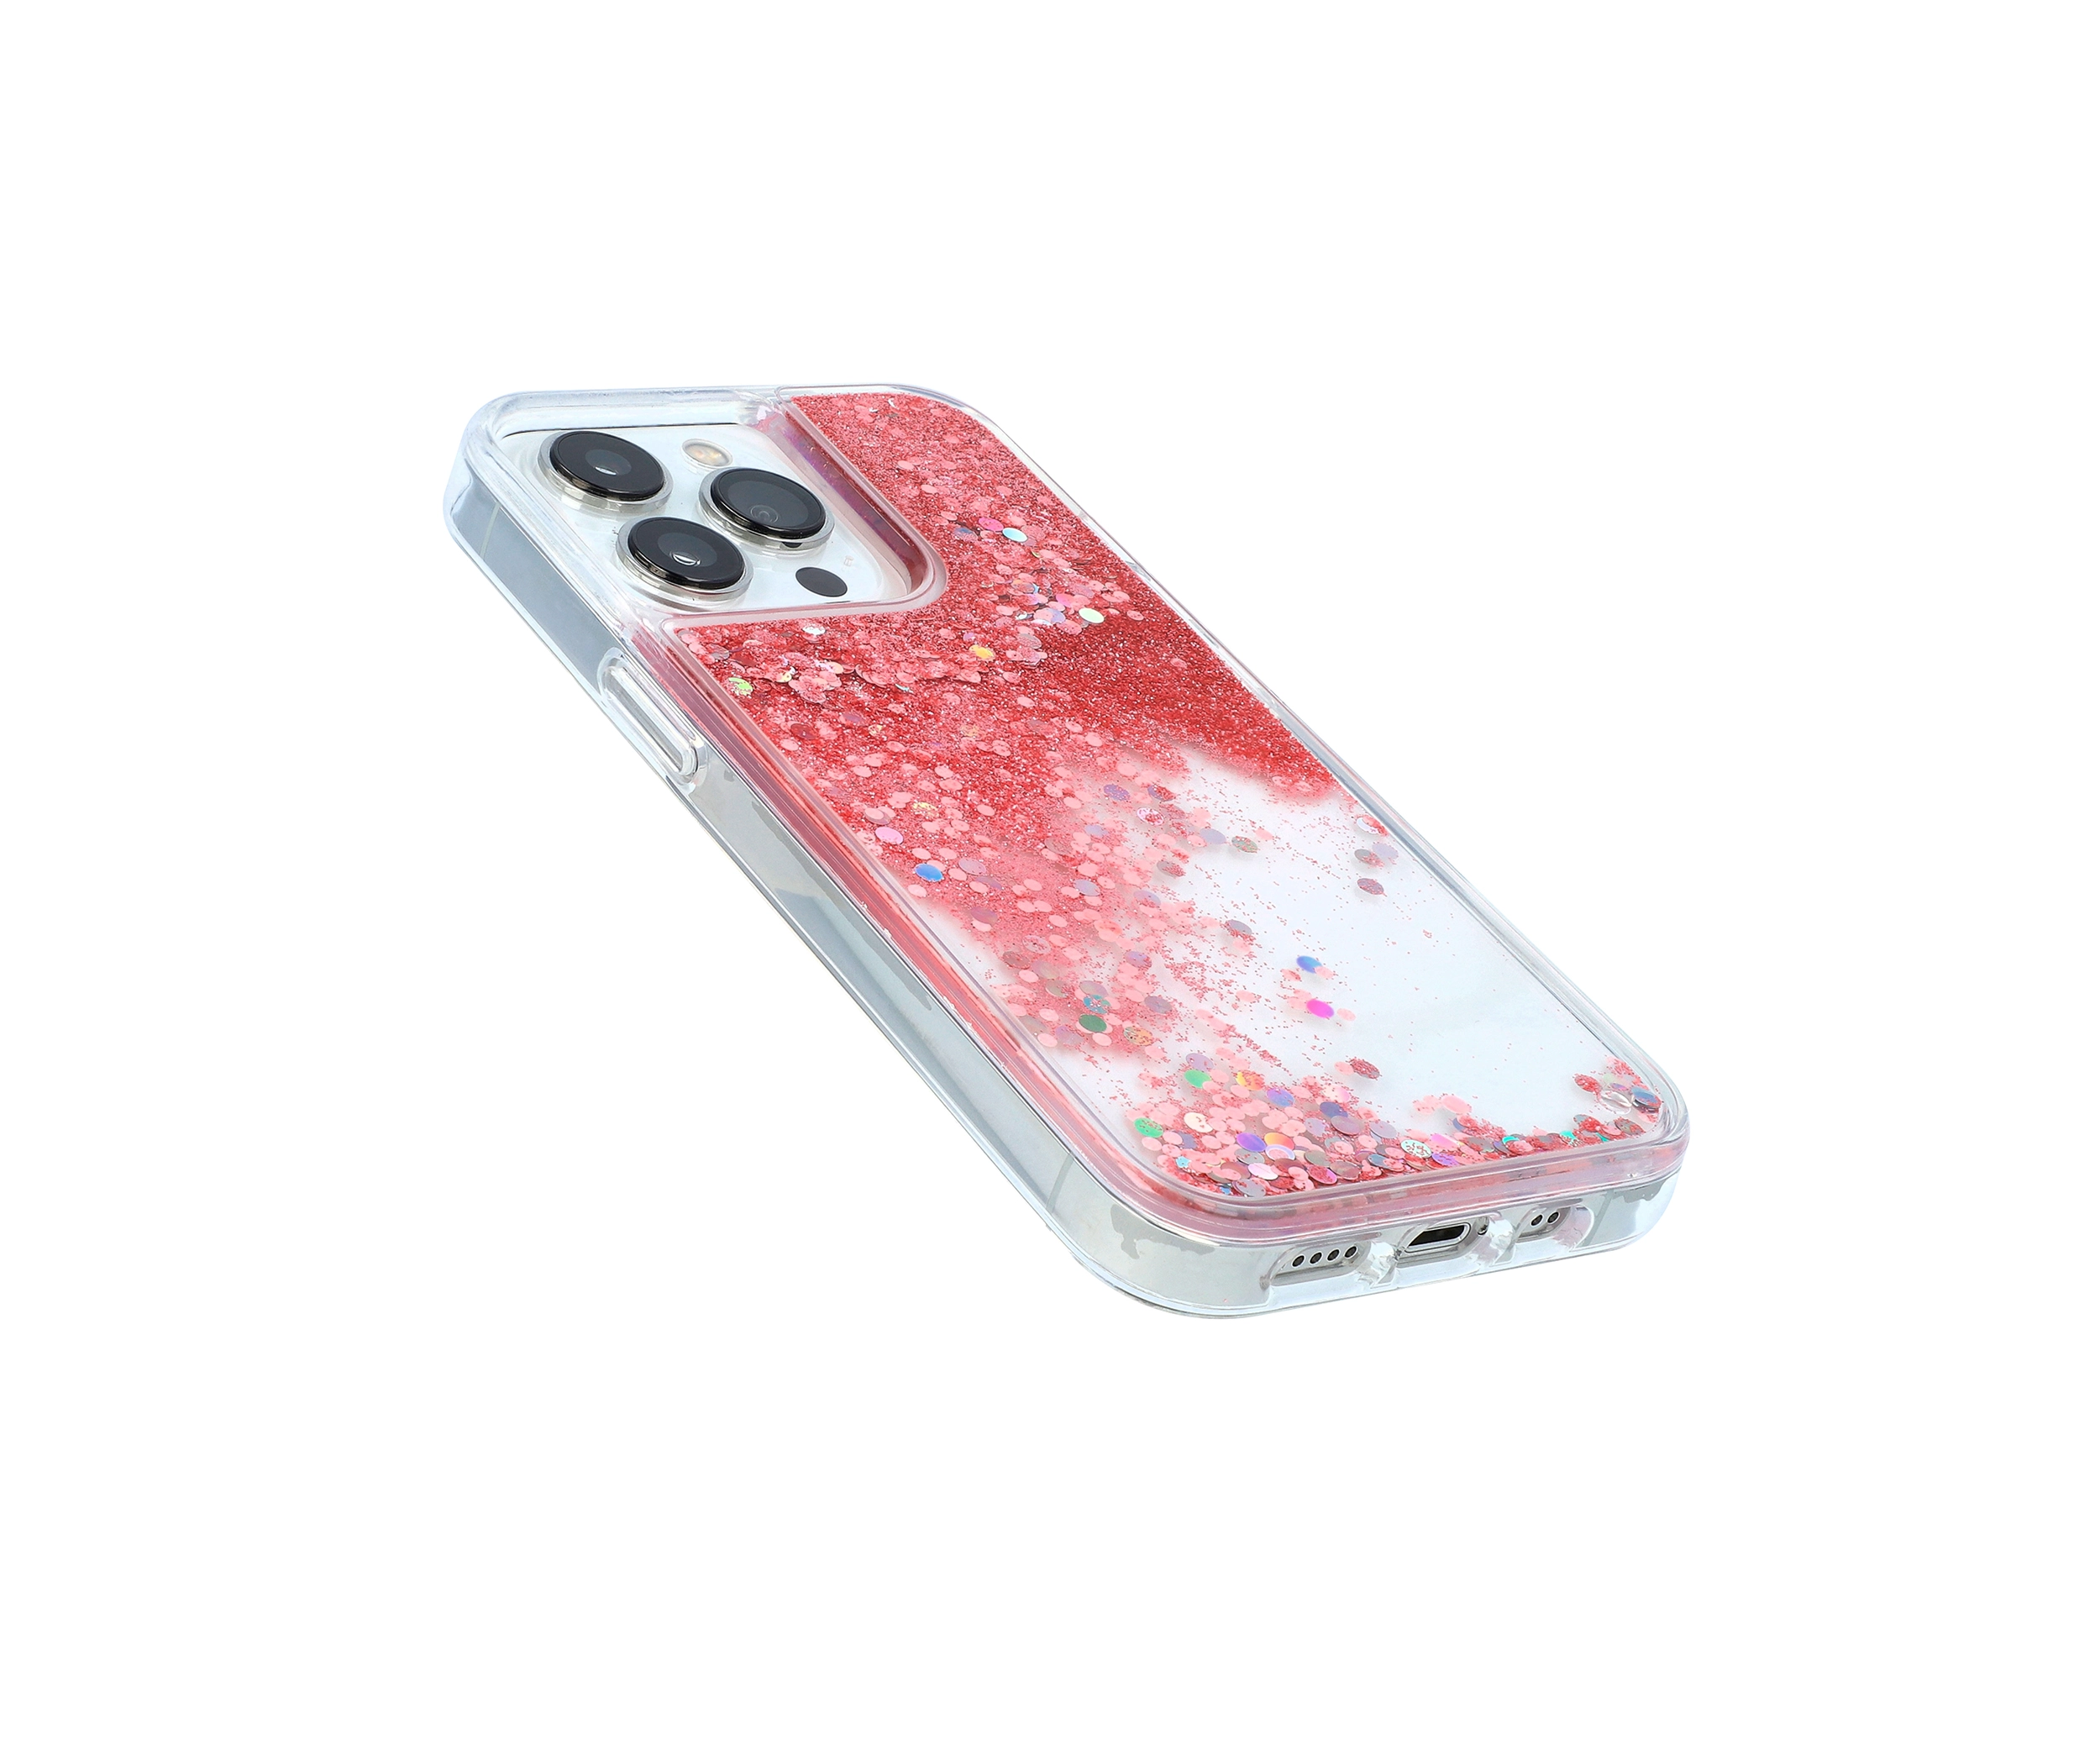 Why Glitter OEM Phone Cases are Trending ?